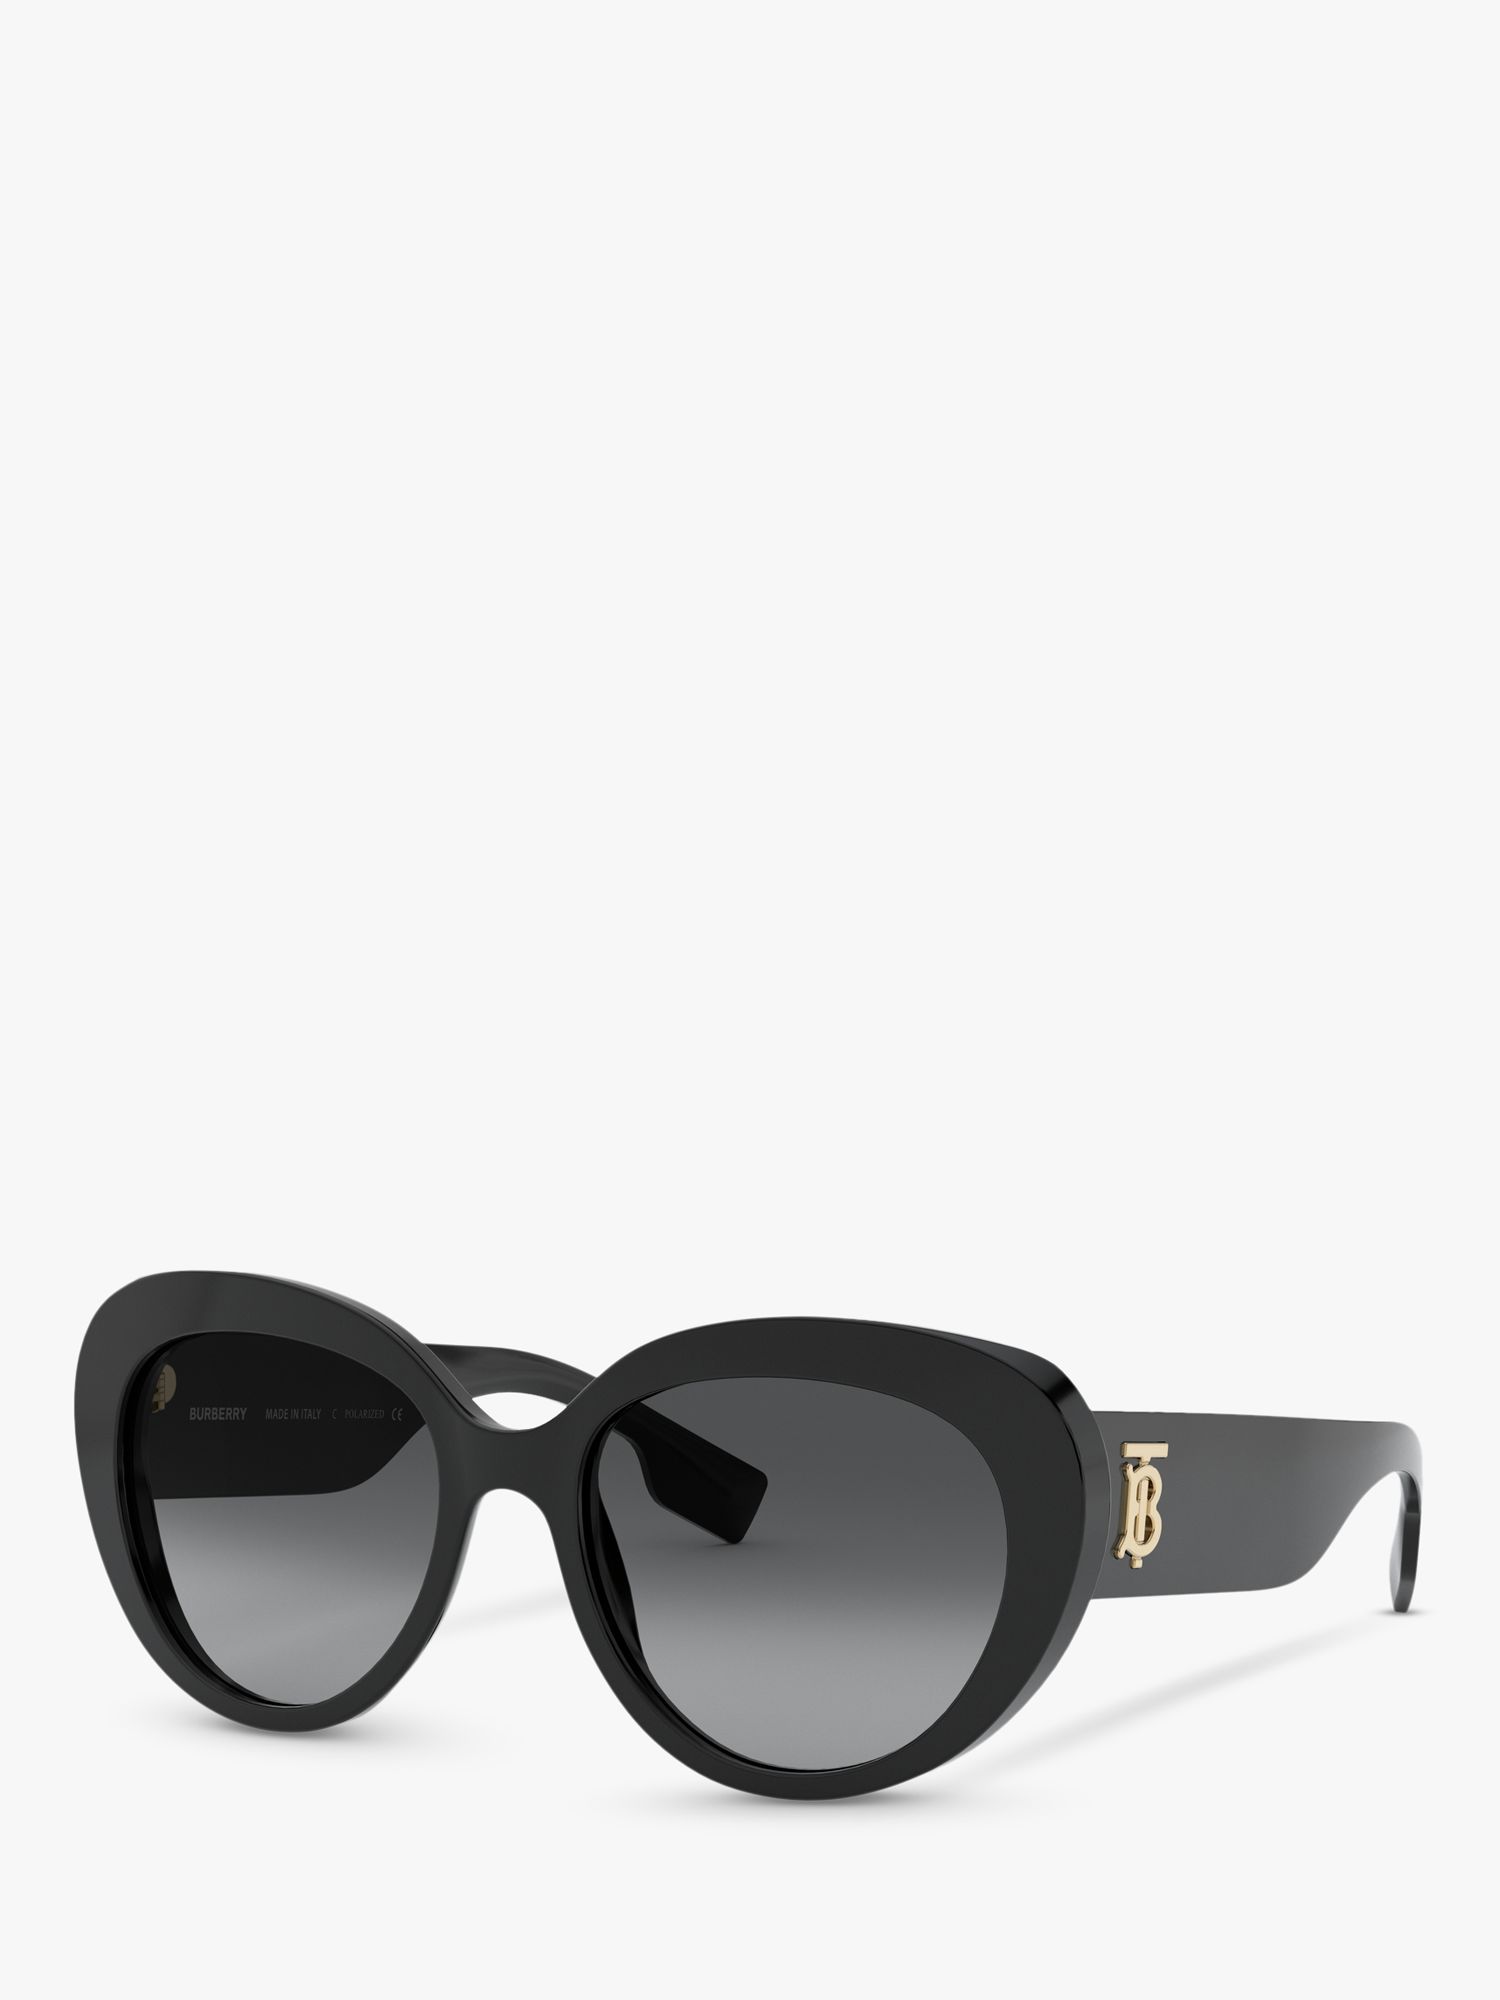 Burberry BE4298 Women's Polarised Cat's Eye Sunglasses, Black/Grey Gradient  at John Lewis & Partners